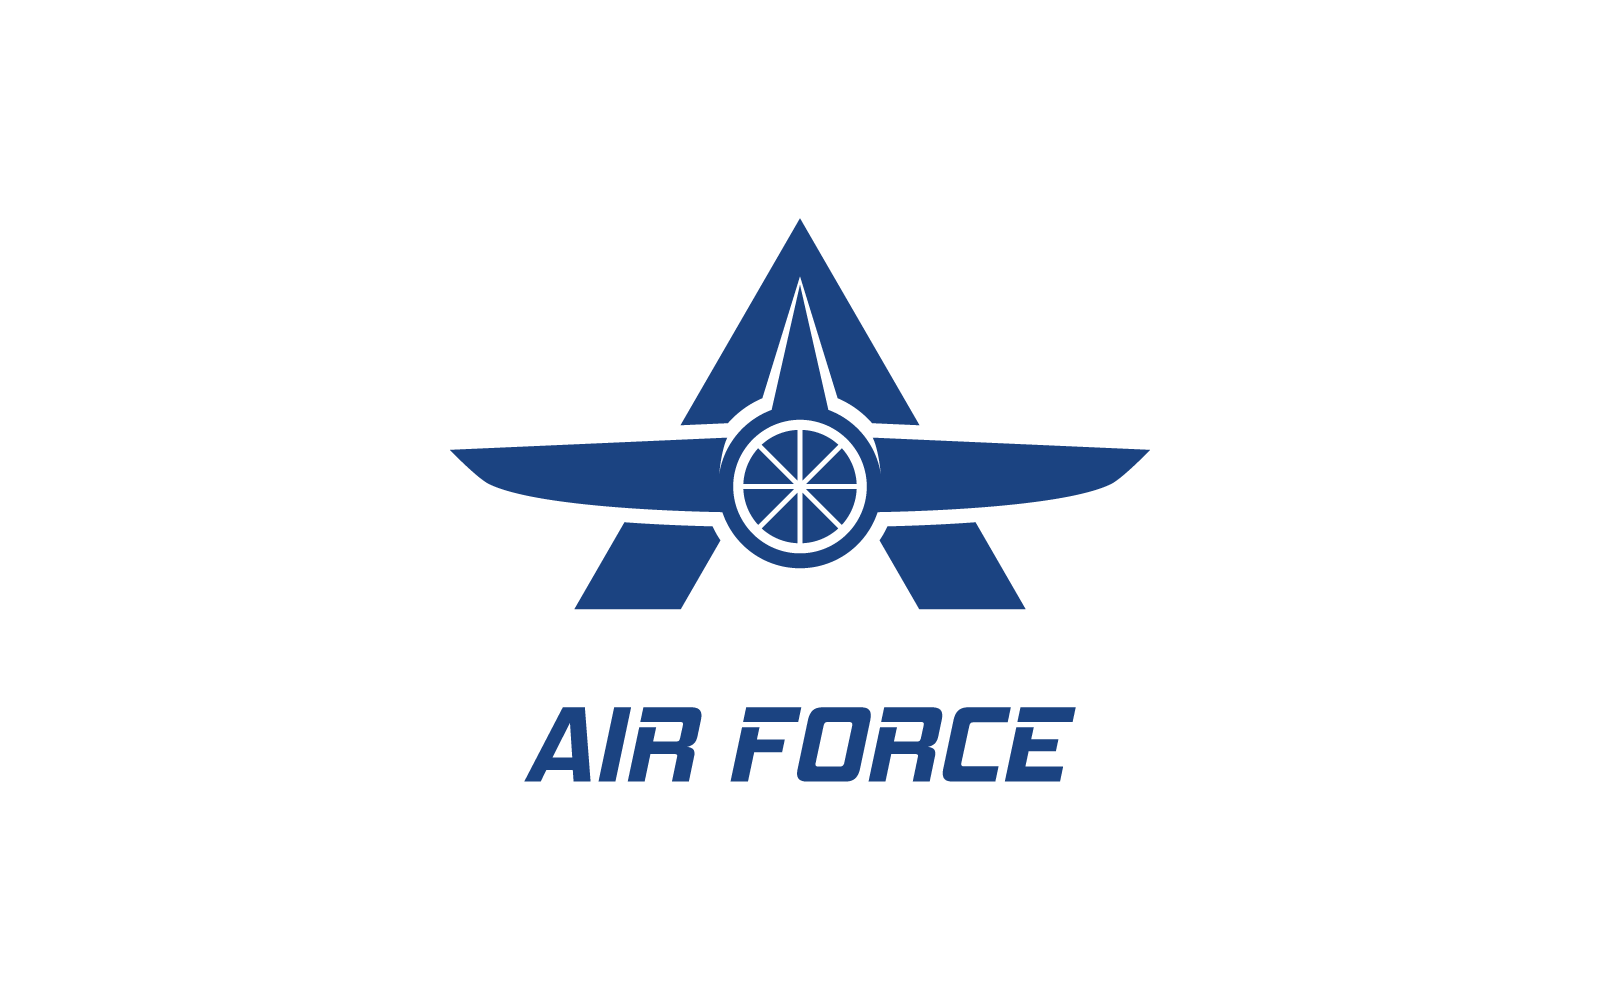 Air force plane military logo vector design